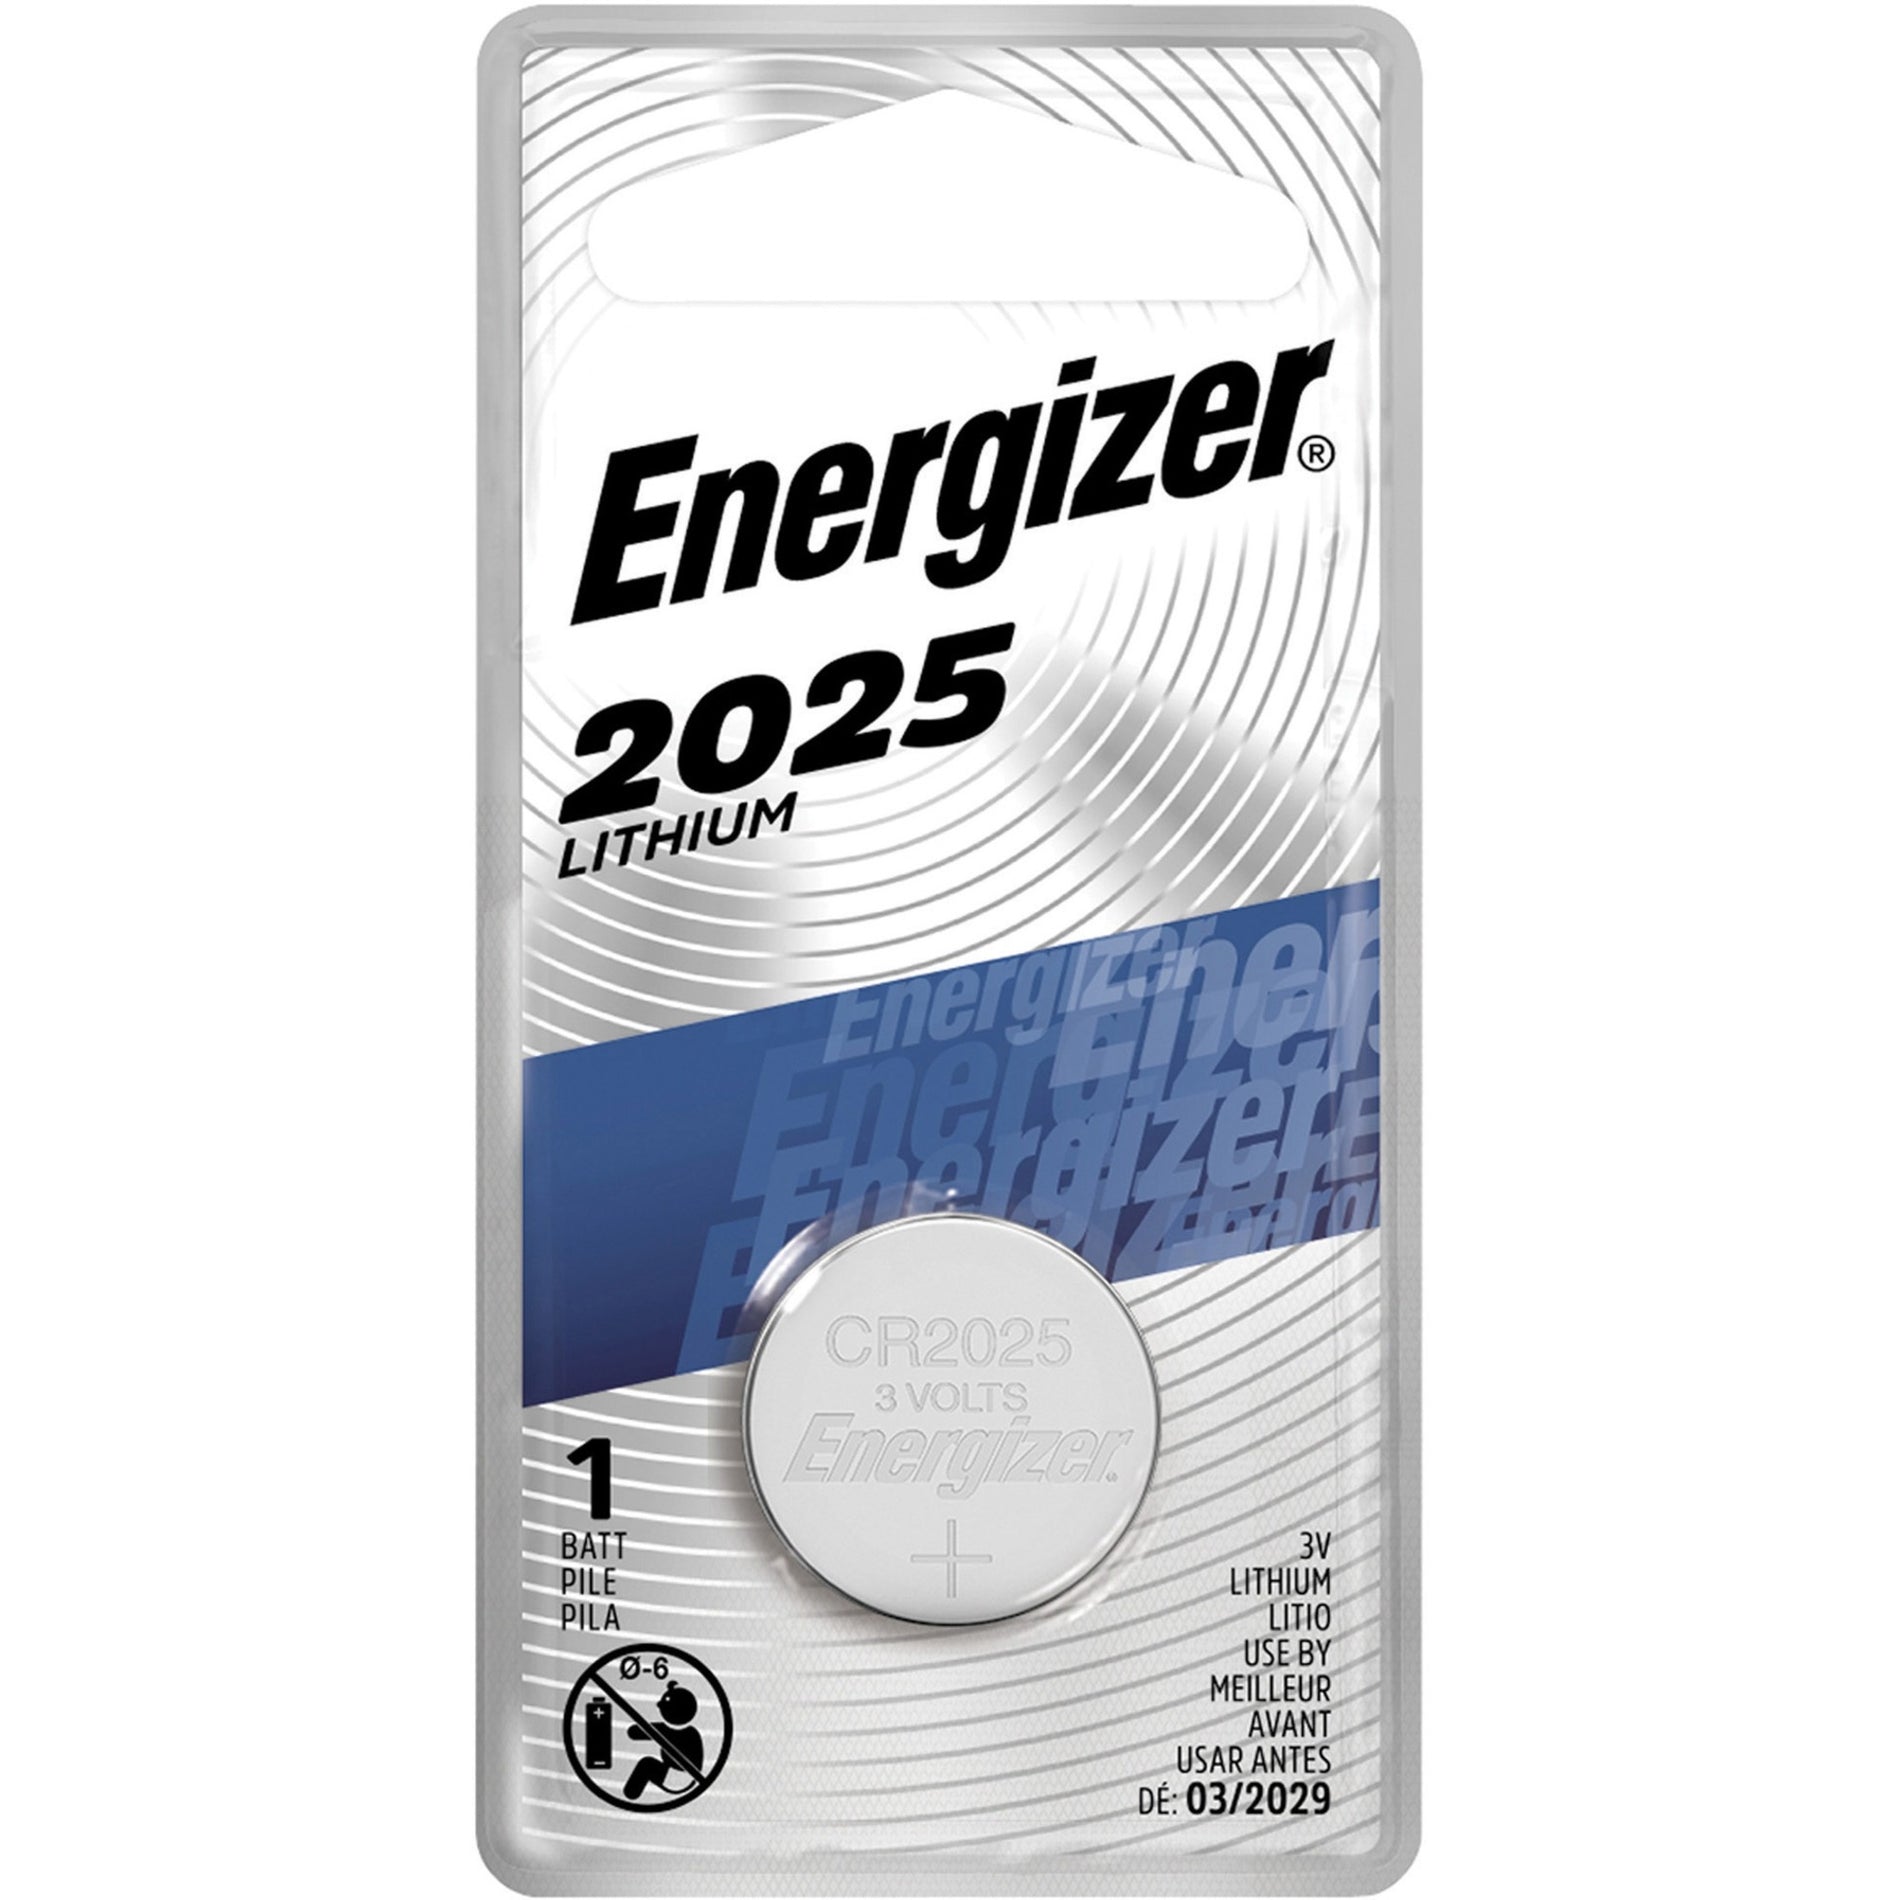 Energizer ECR-2025BP 2025 Lithium Coin Battery, 3 Volt, Multipurpose